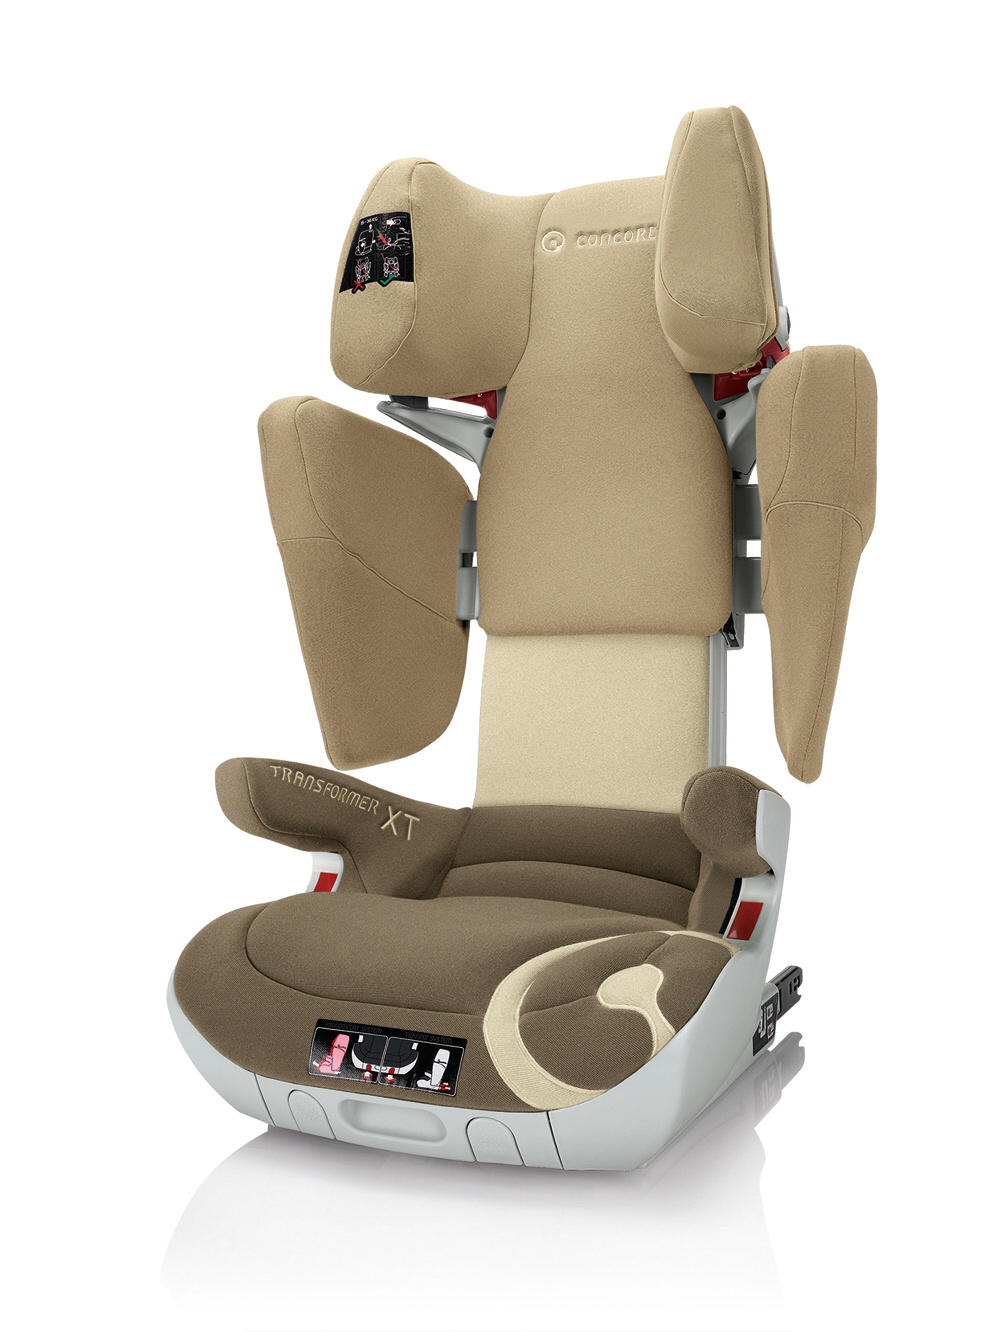 CONCORD 康科德 Transformer-XT 儿童汽车安全座椅 桃木棕